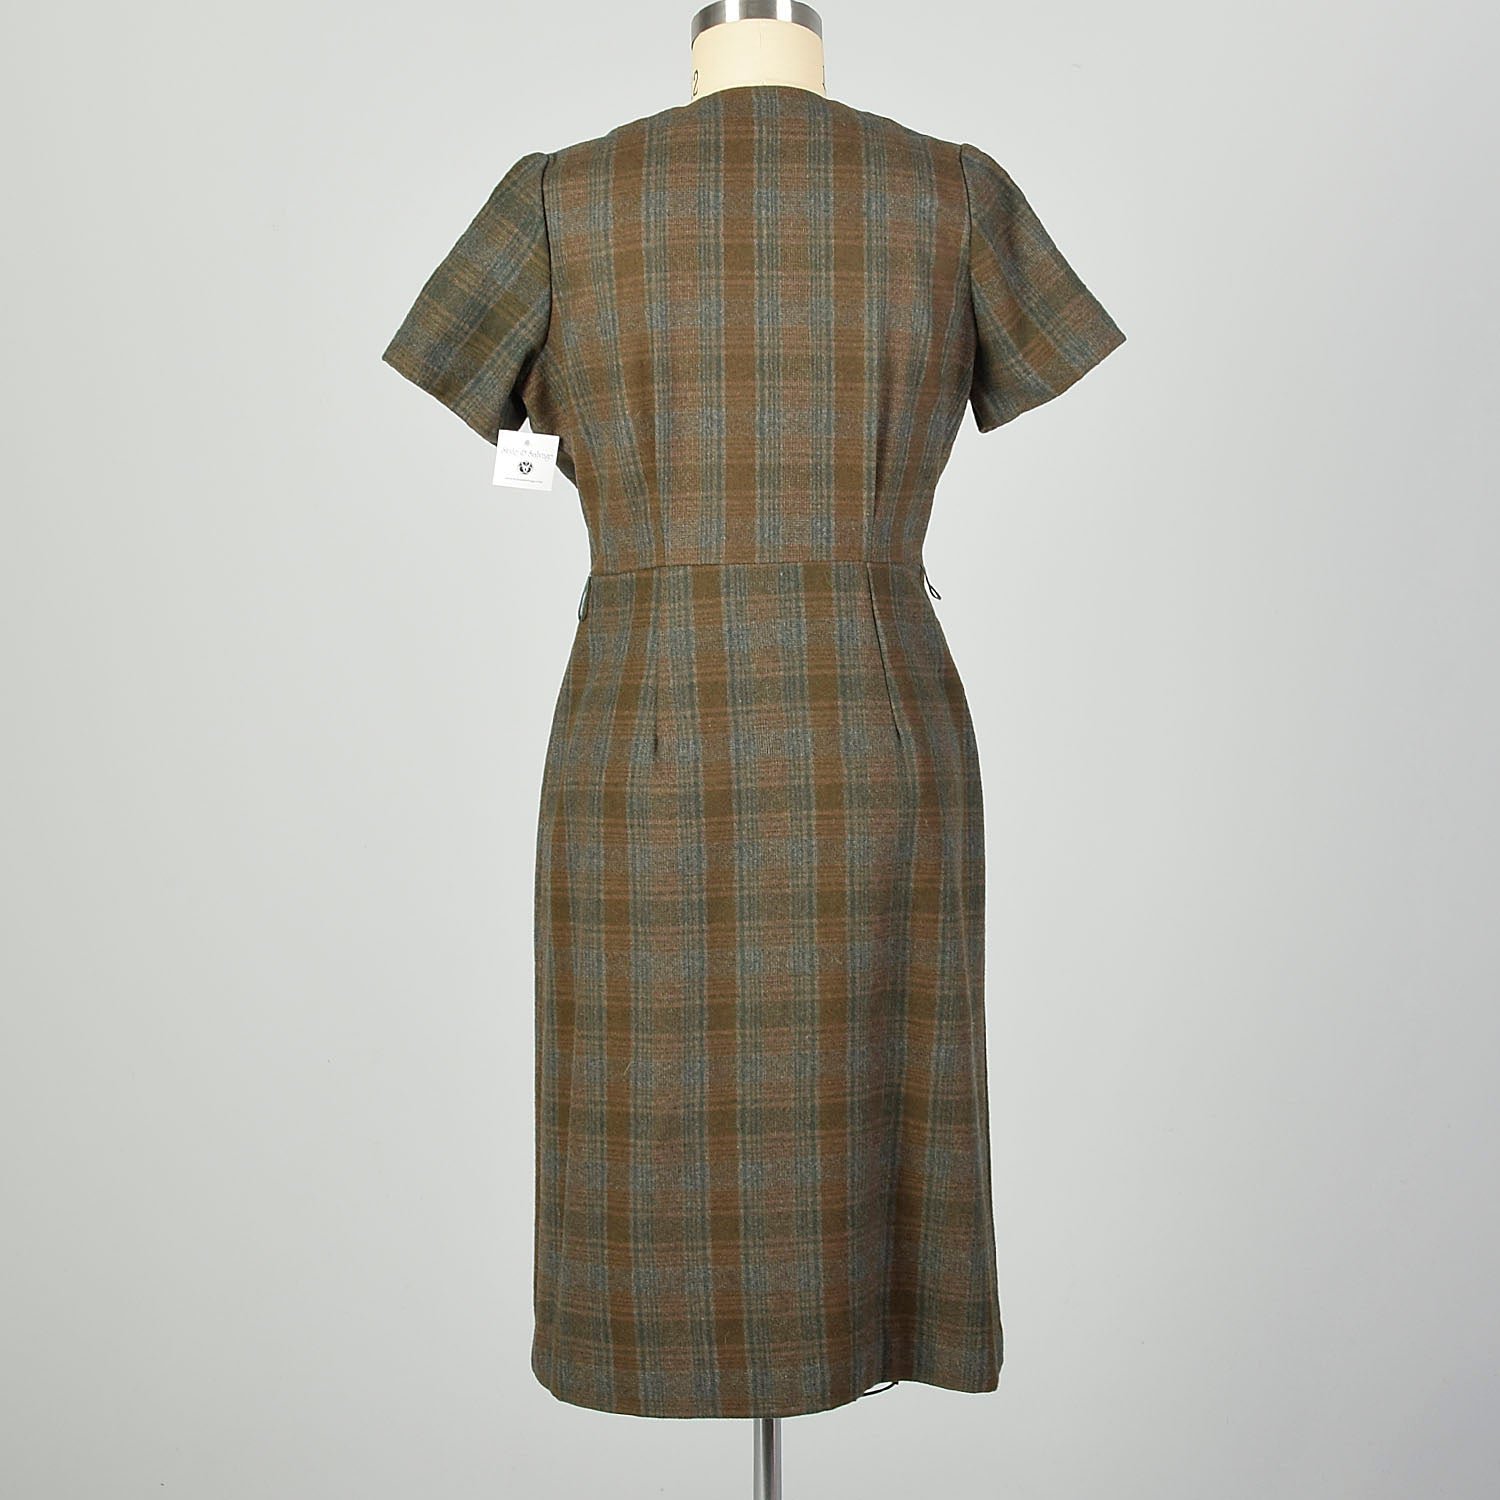 XL-XXL 1950s Wool Button-up Dress Green and Brown Plaid Button-up